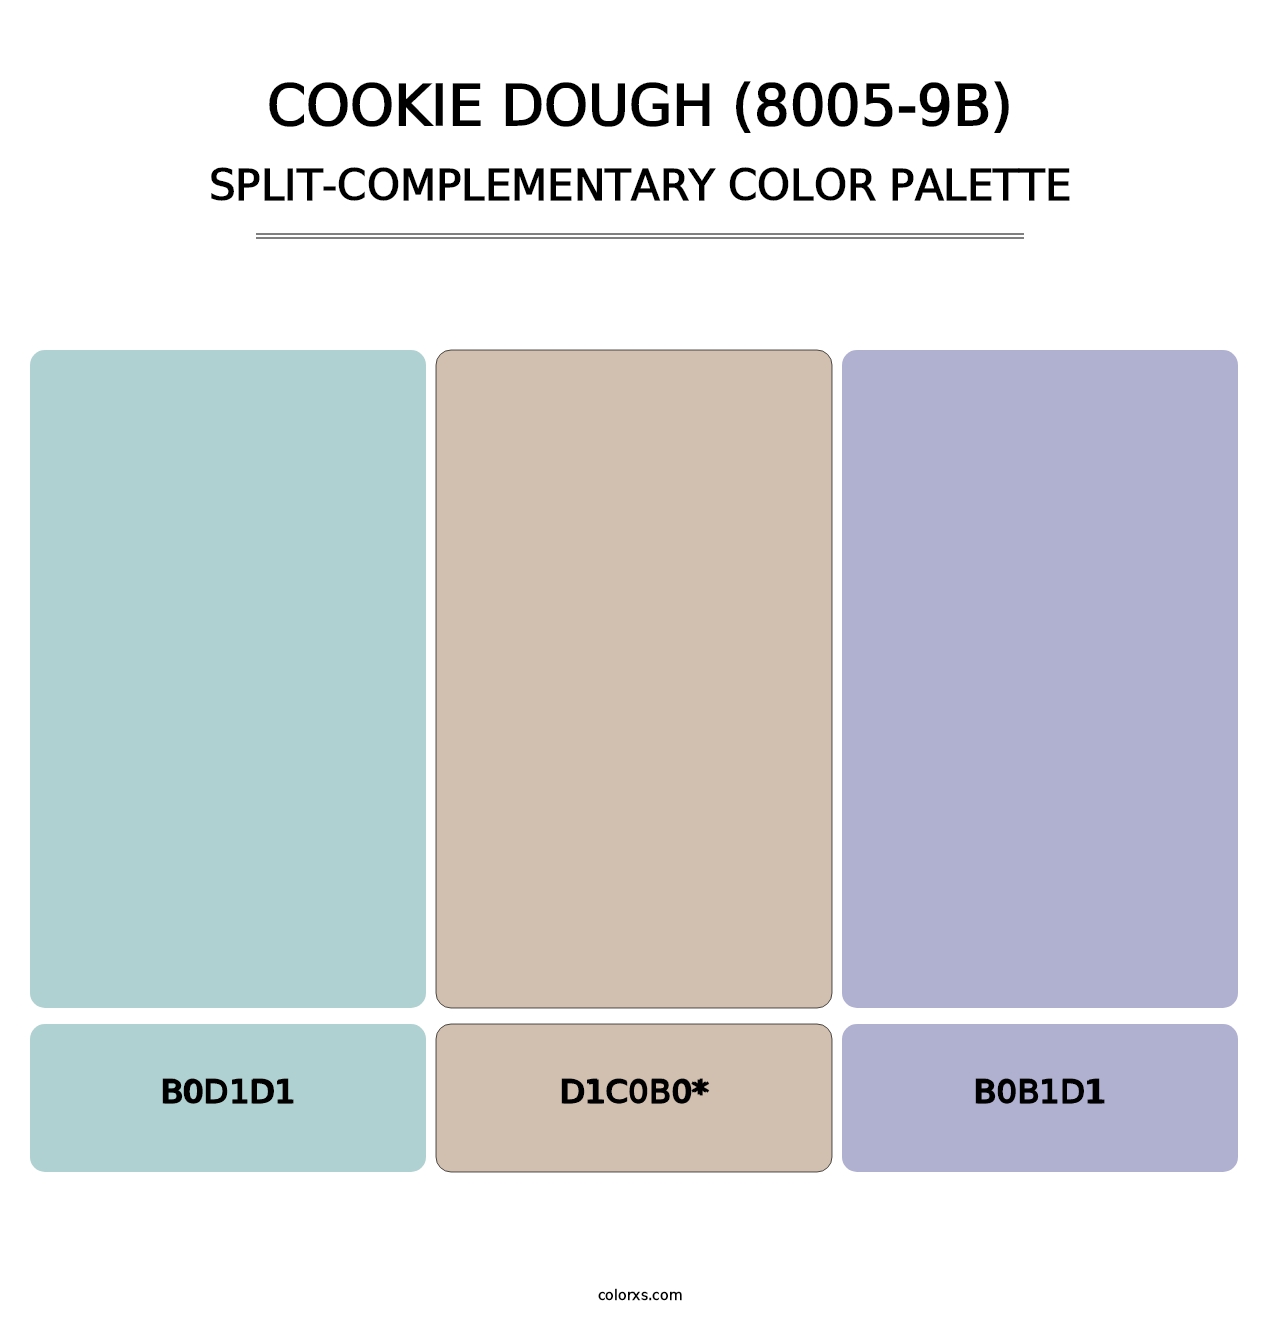 Cookie Dough (8005-9B) - Split-Complementary Color Palette